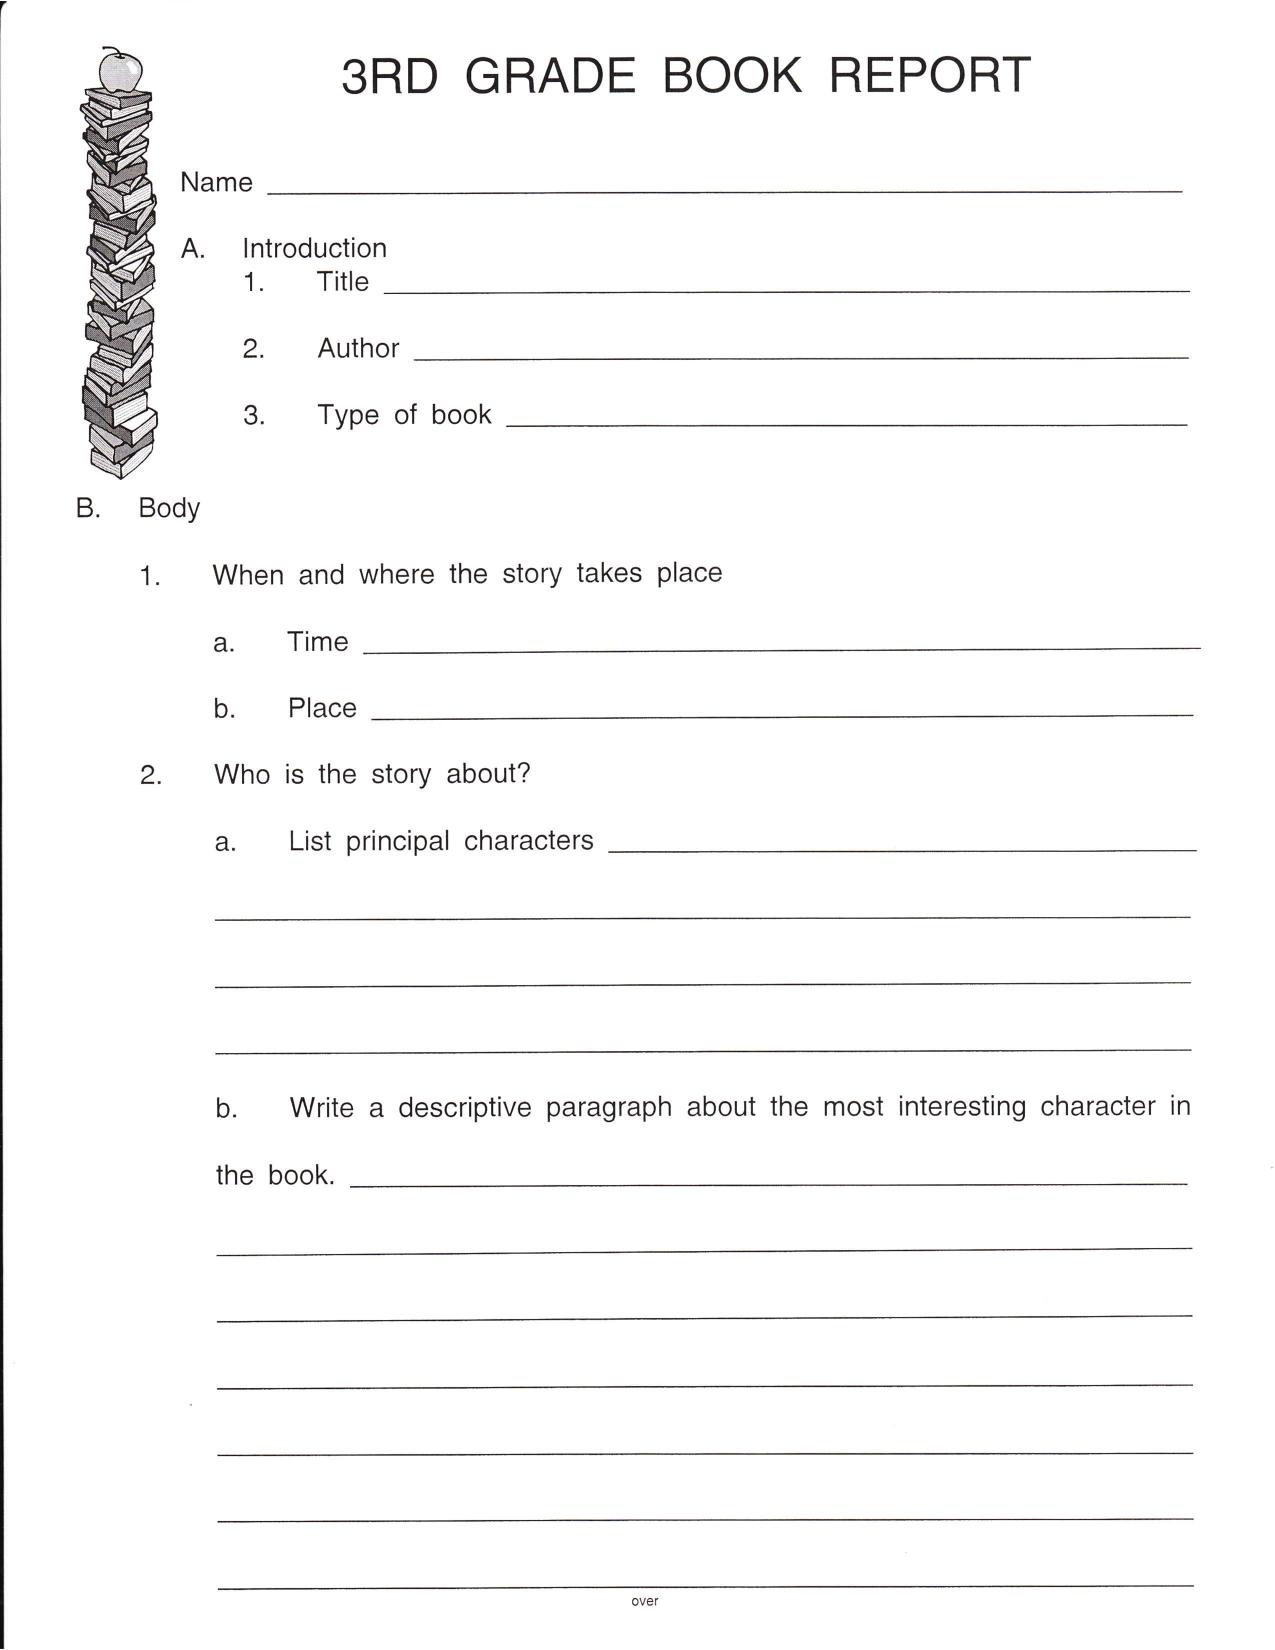 Pinshelena Schweitzer On Classroom Reading | Book Report With Book Report Template Grade 1